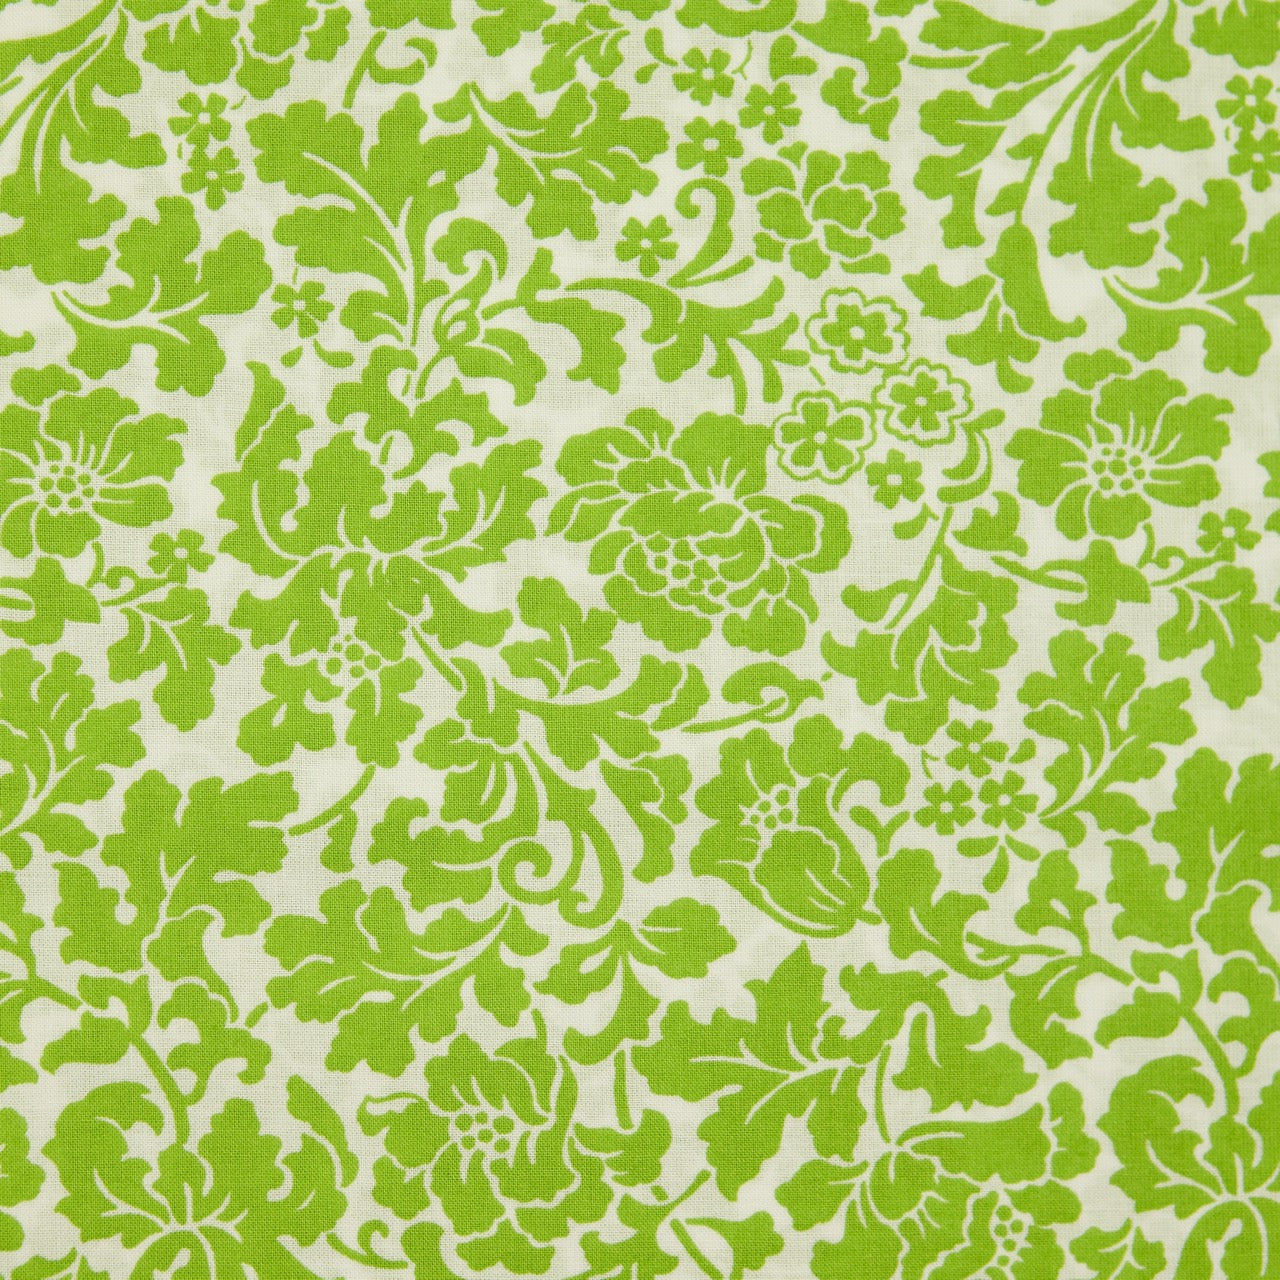 Quilting Cotton - Floral - Green Flourish (detail)